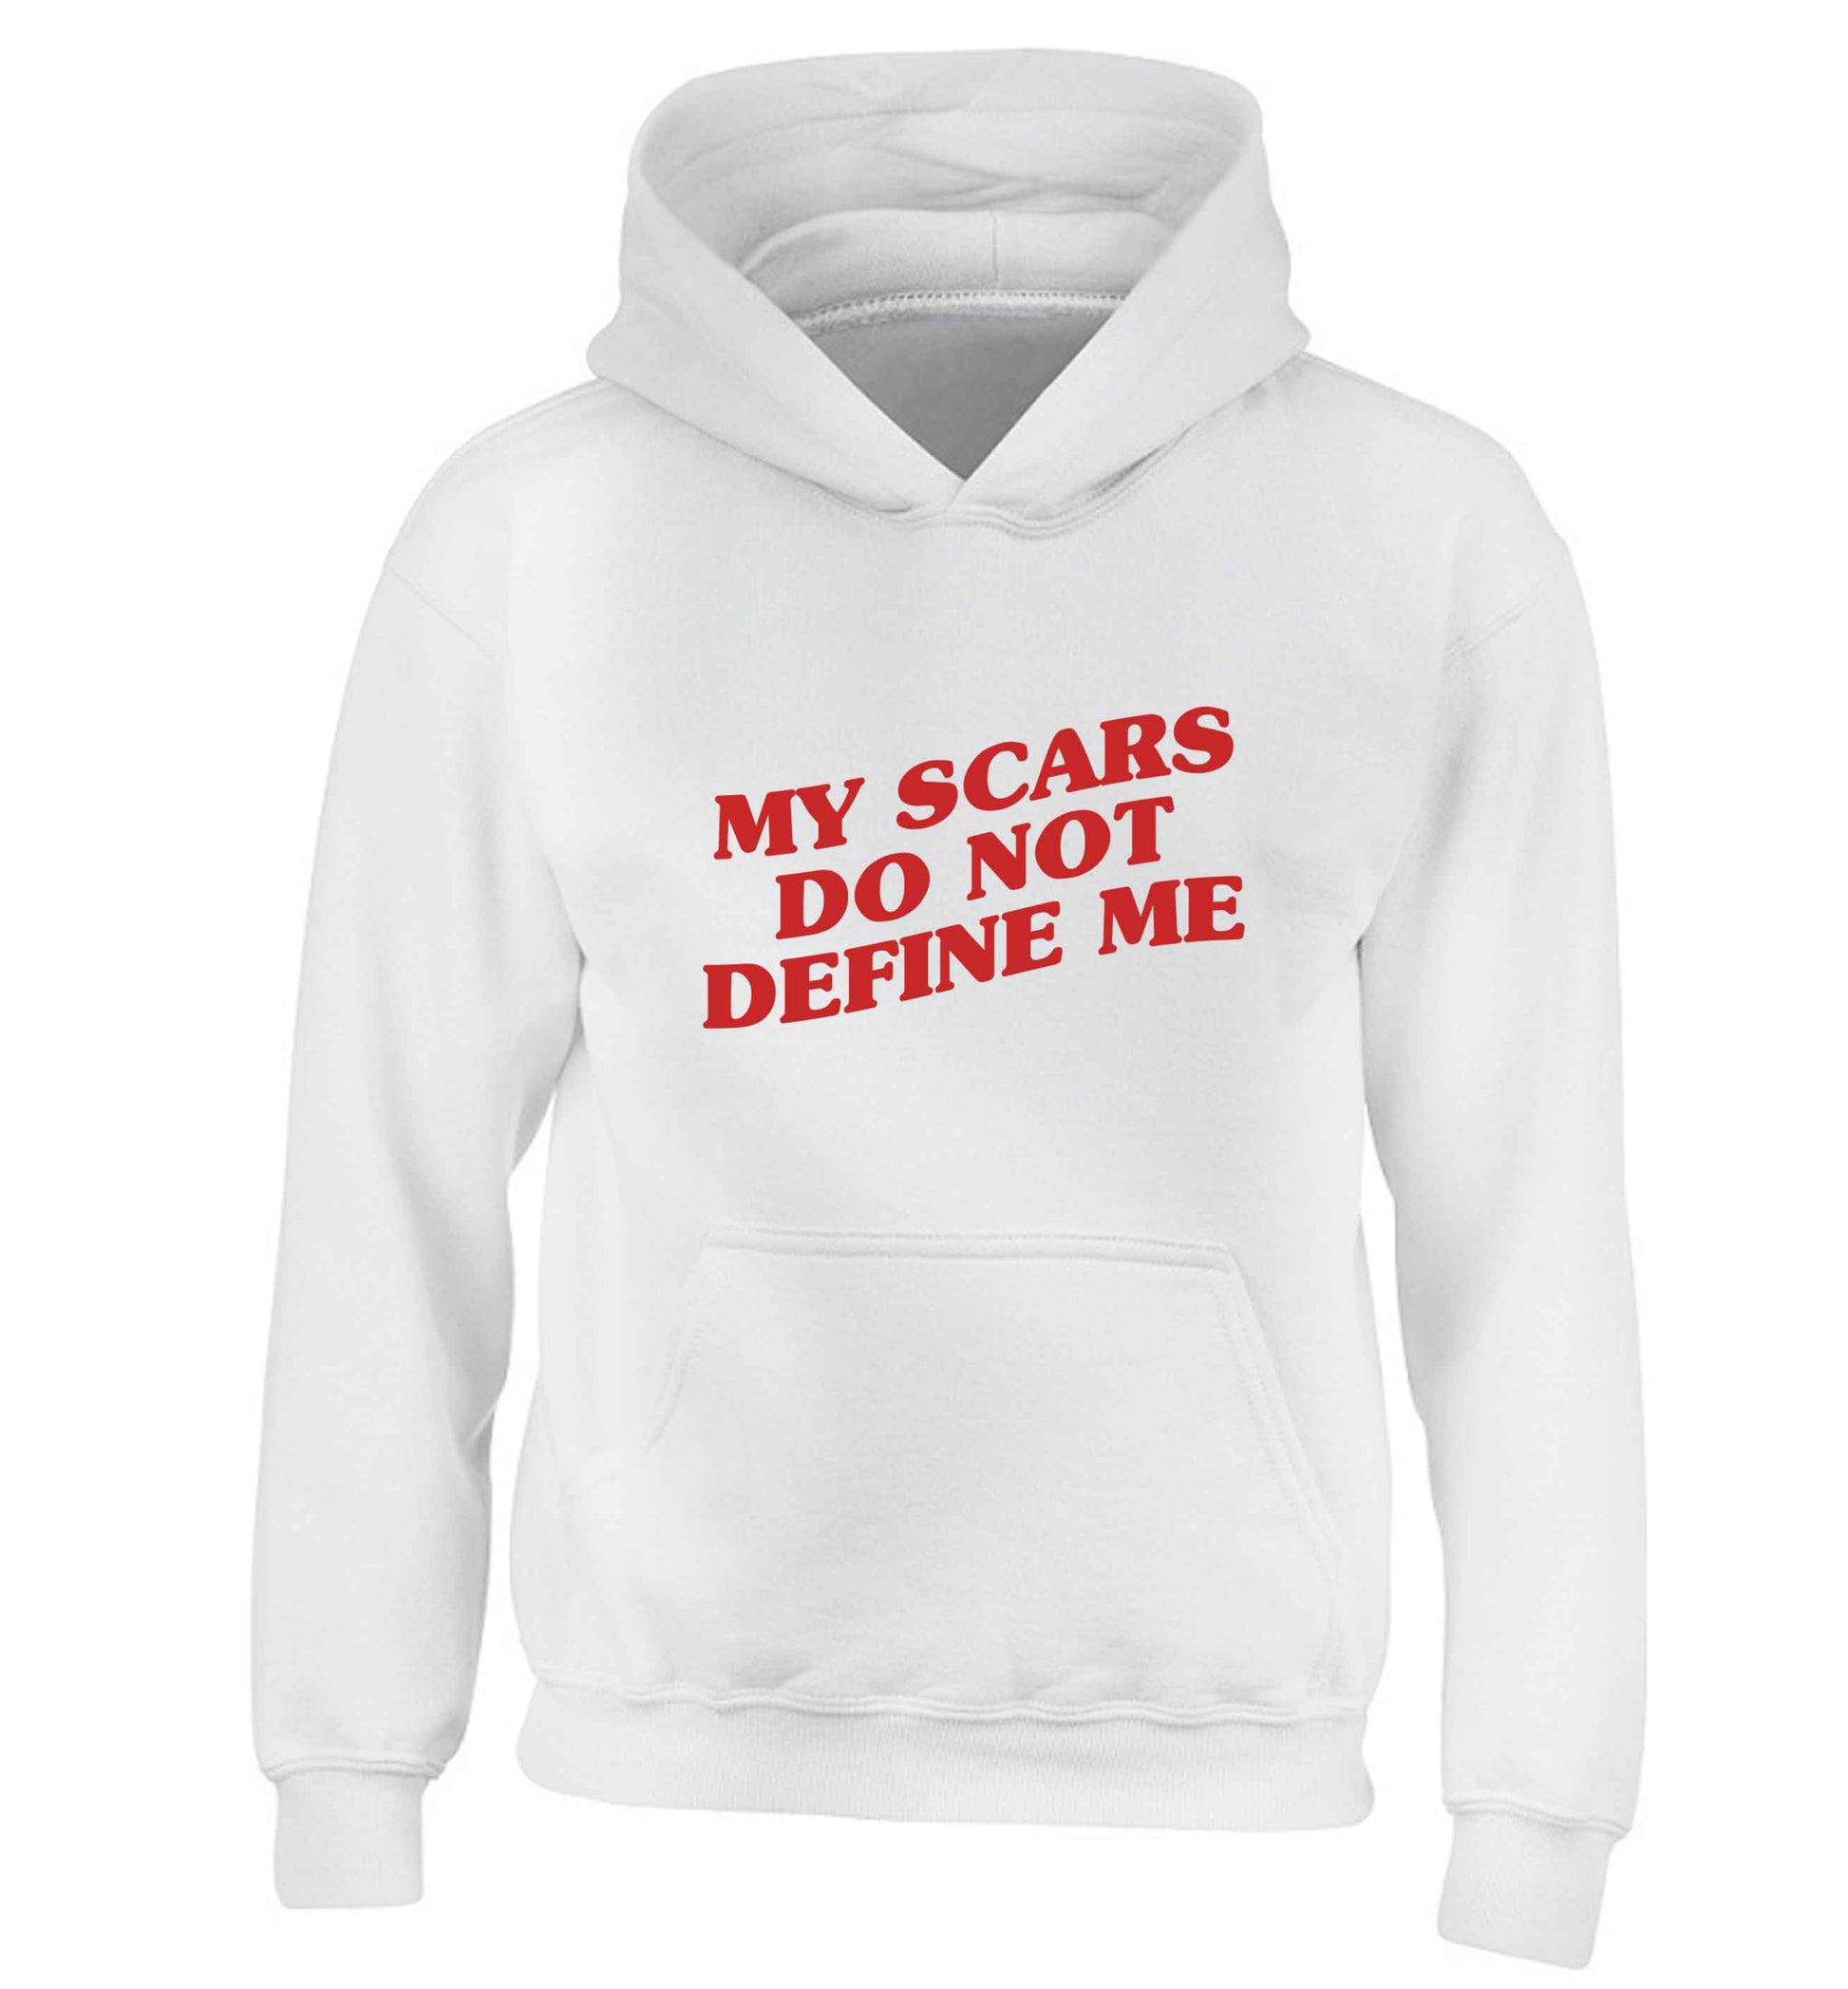 My scars do not define me children's white hoodie 12-13 Years